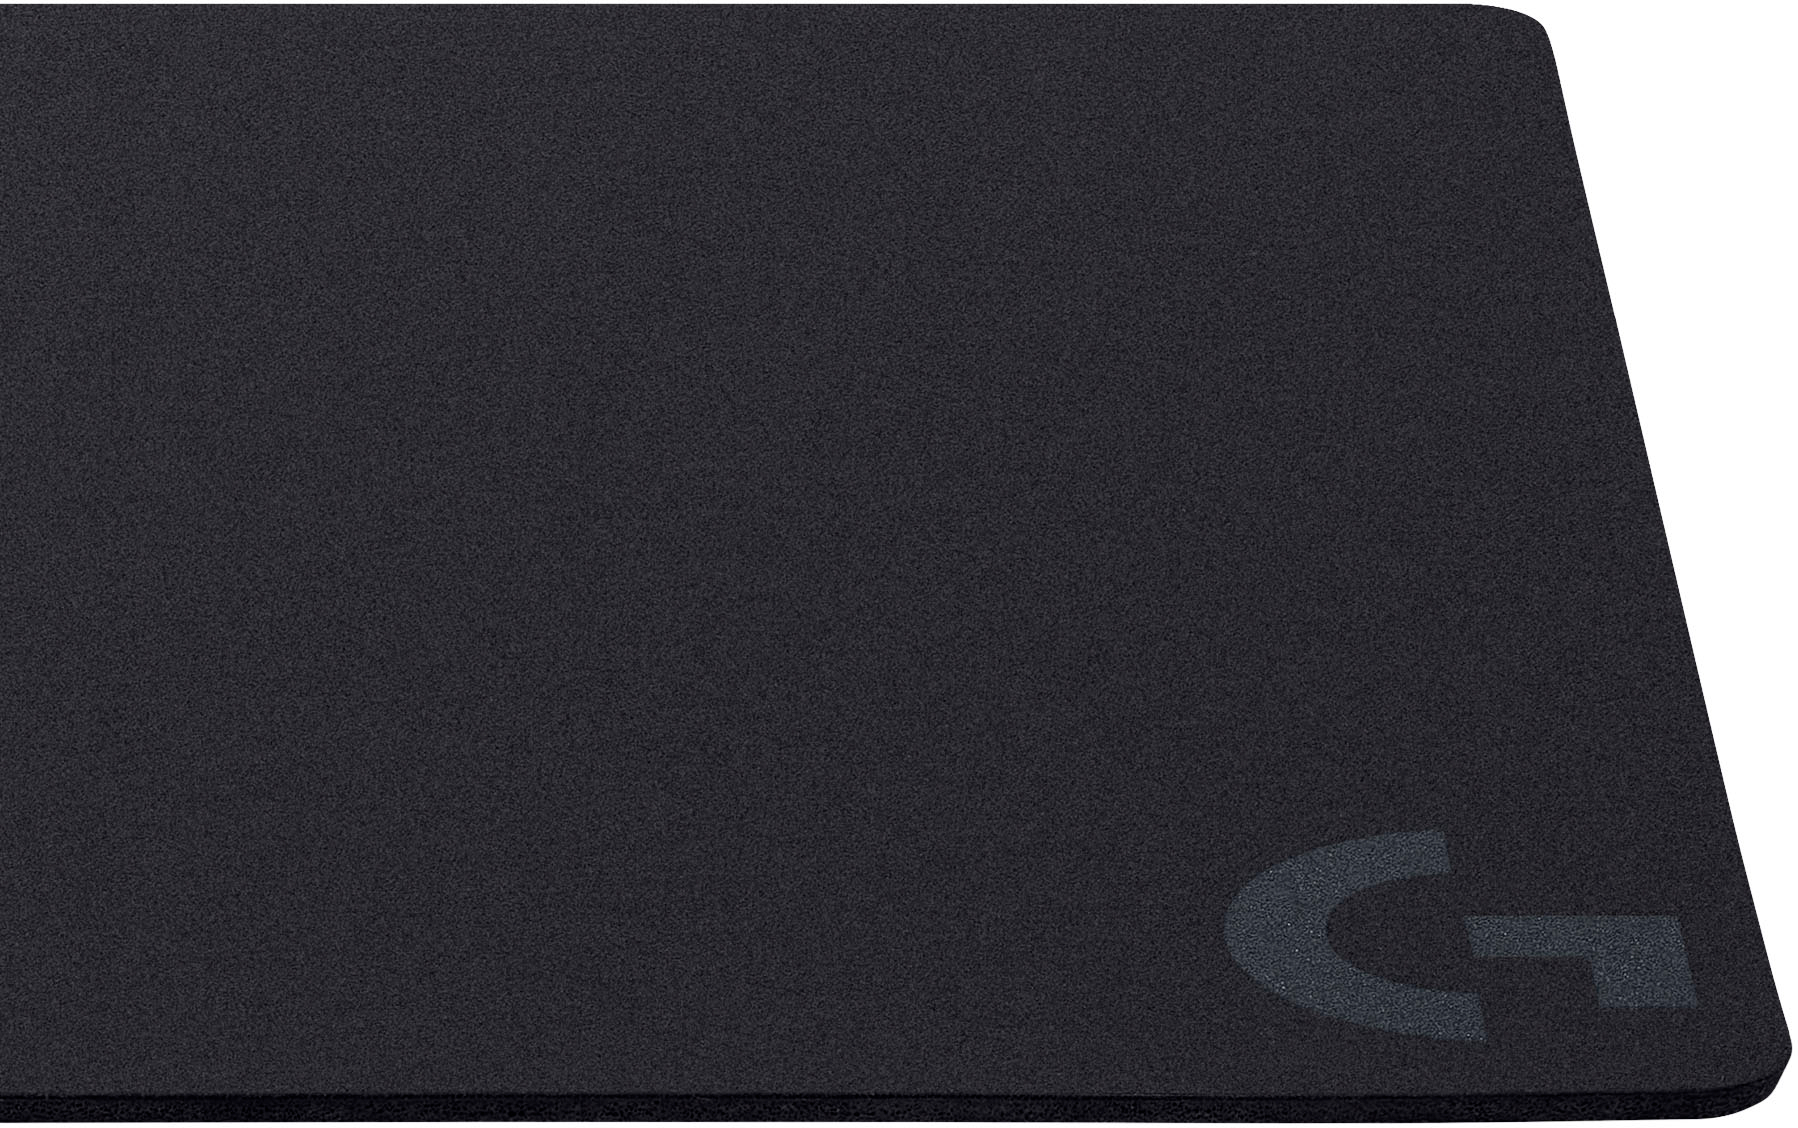 LOGITECH Tapis de souris Gaming G440 Rigide 340x280mm Noir - Tapis de Souris  - LOGITECH